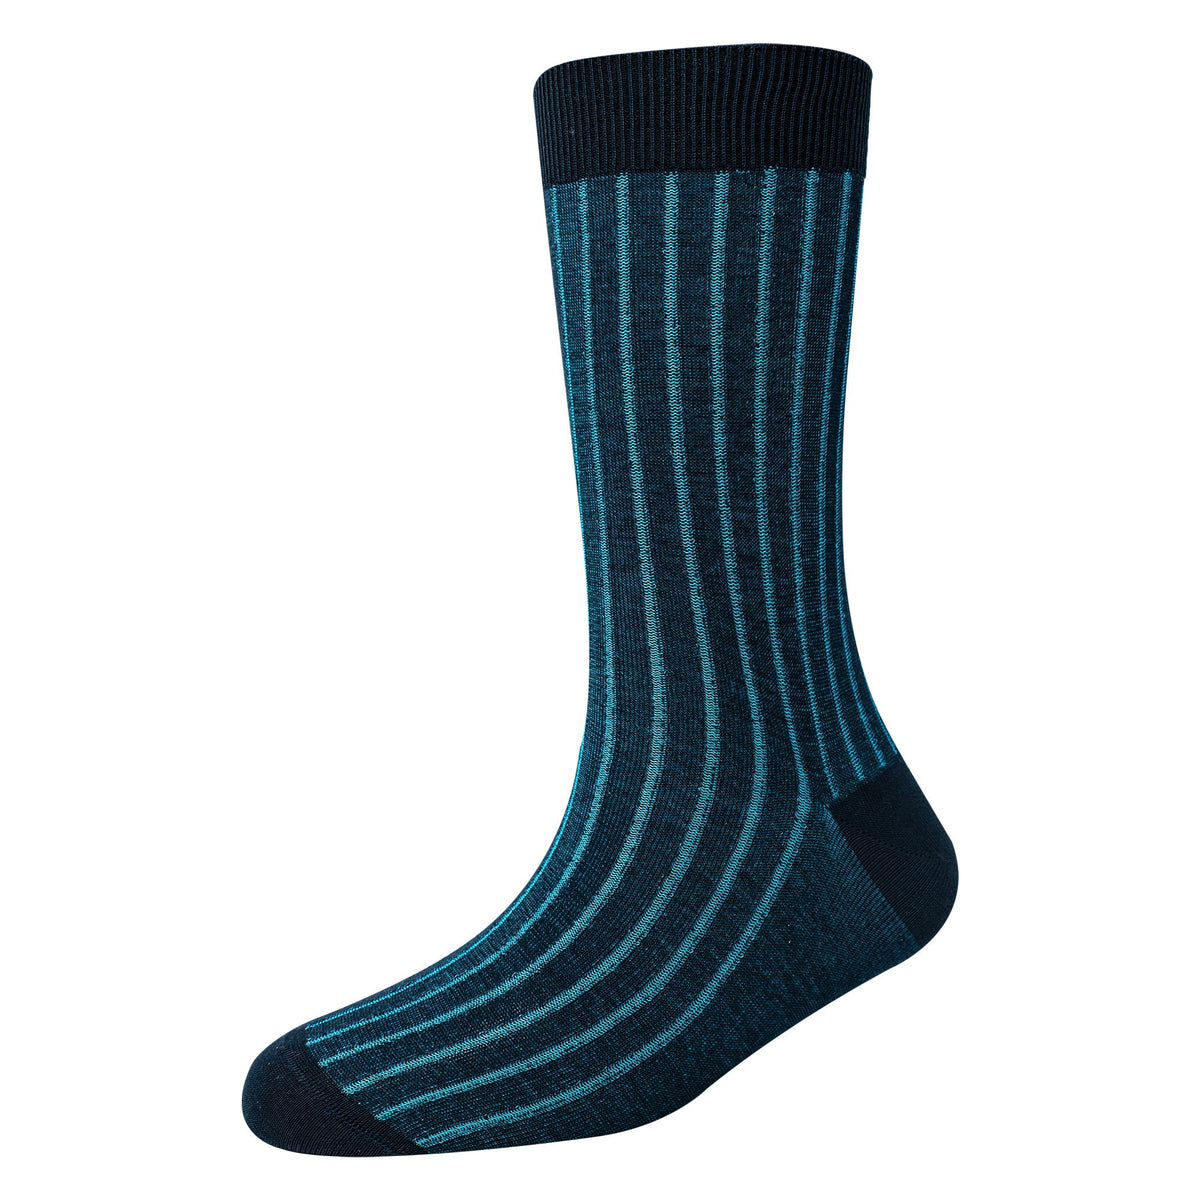 Men's Super Fine 8x1 Shadow Rib Standard Length socks